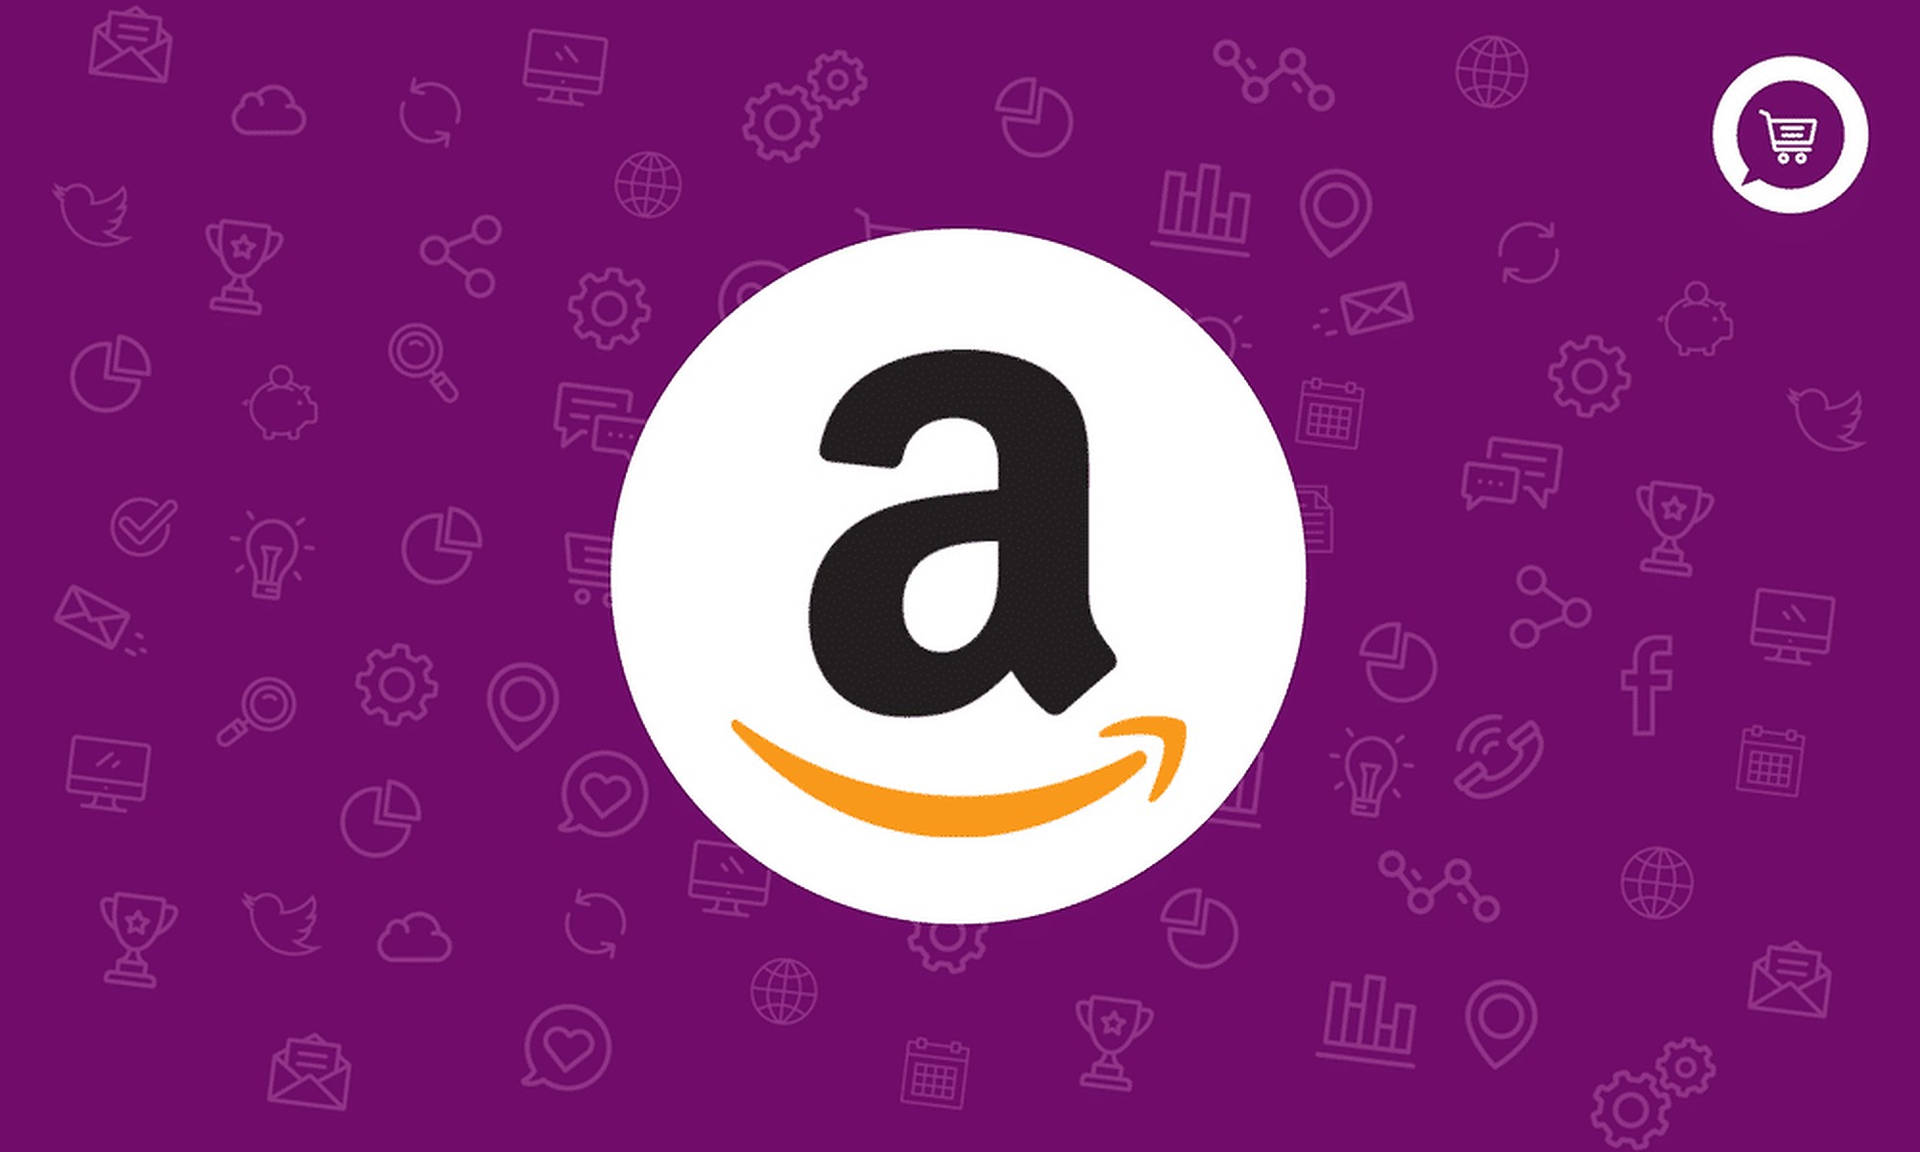 Amazon Logo And Icons Wallpaper